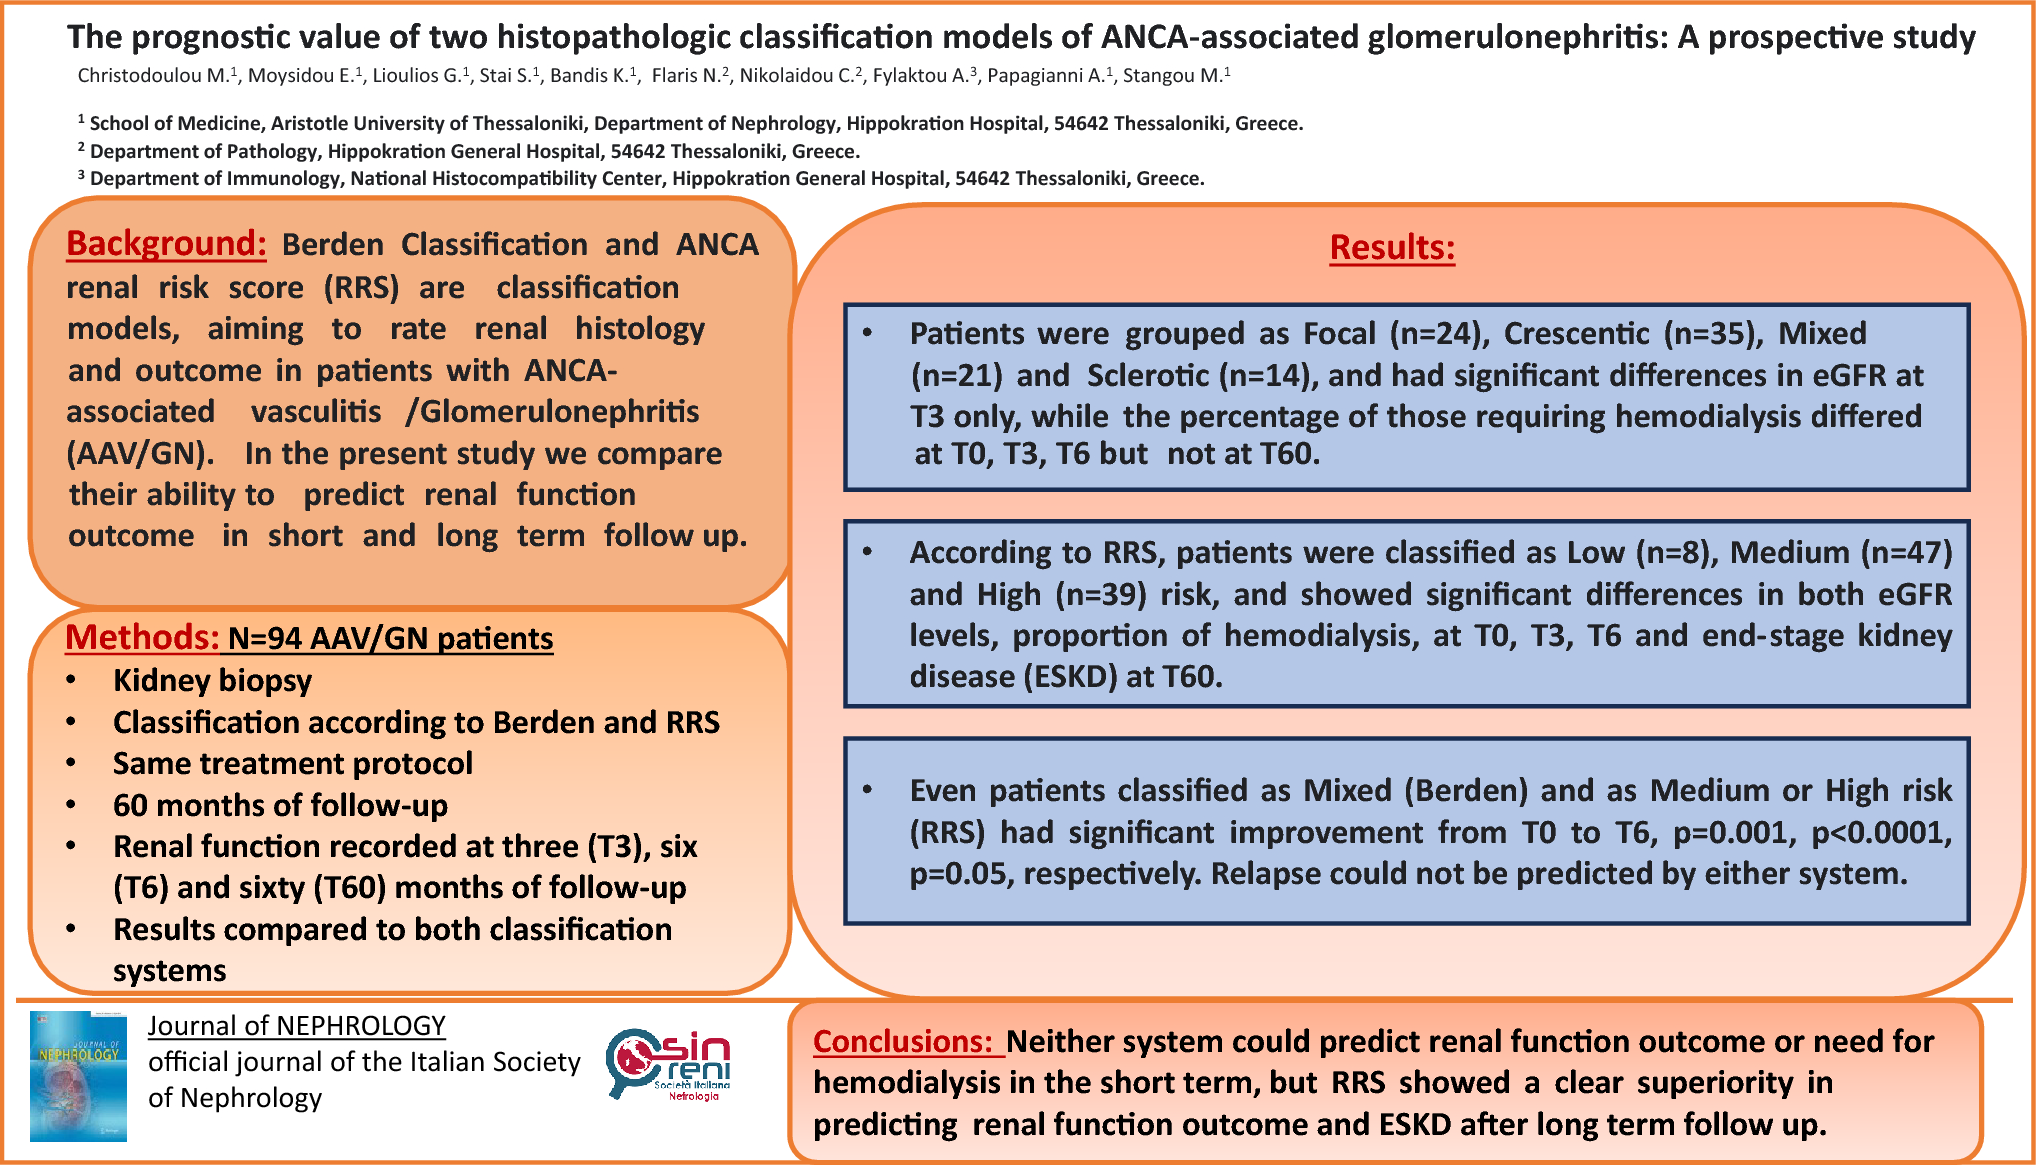 The prognostic value of two histopathologic classification models of ANCA-associated glomerulonephritis: a prospective study